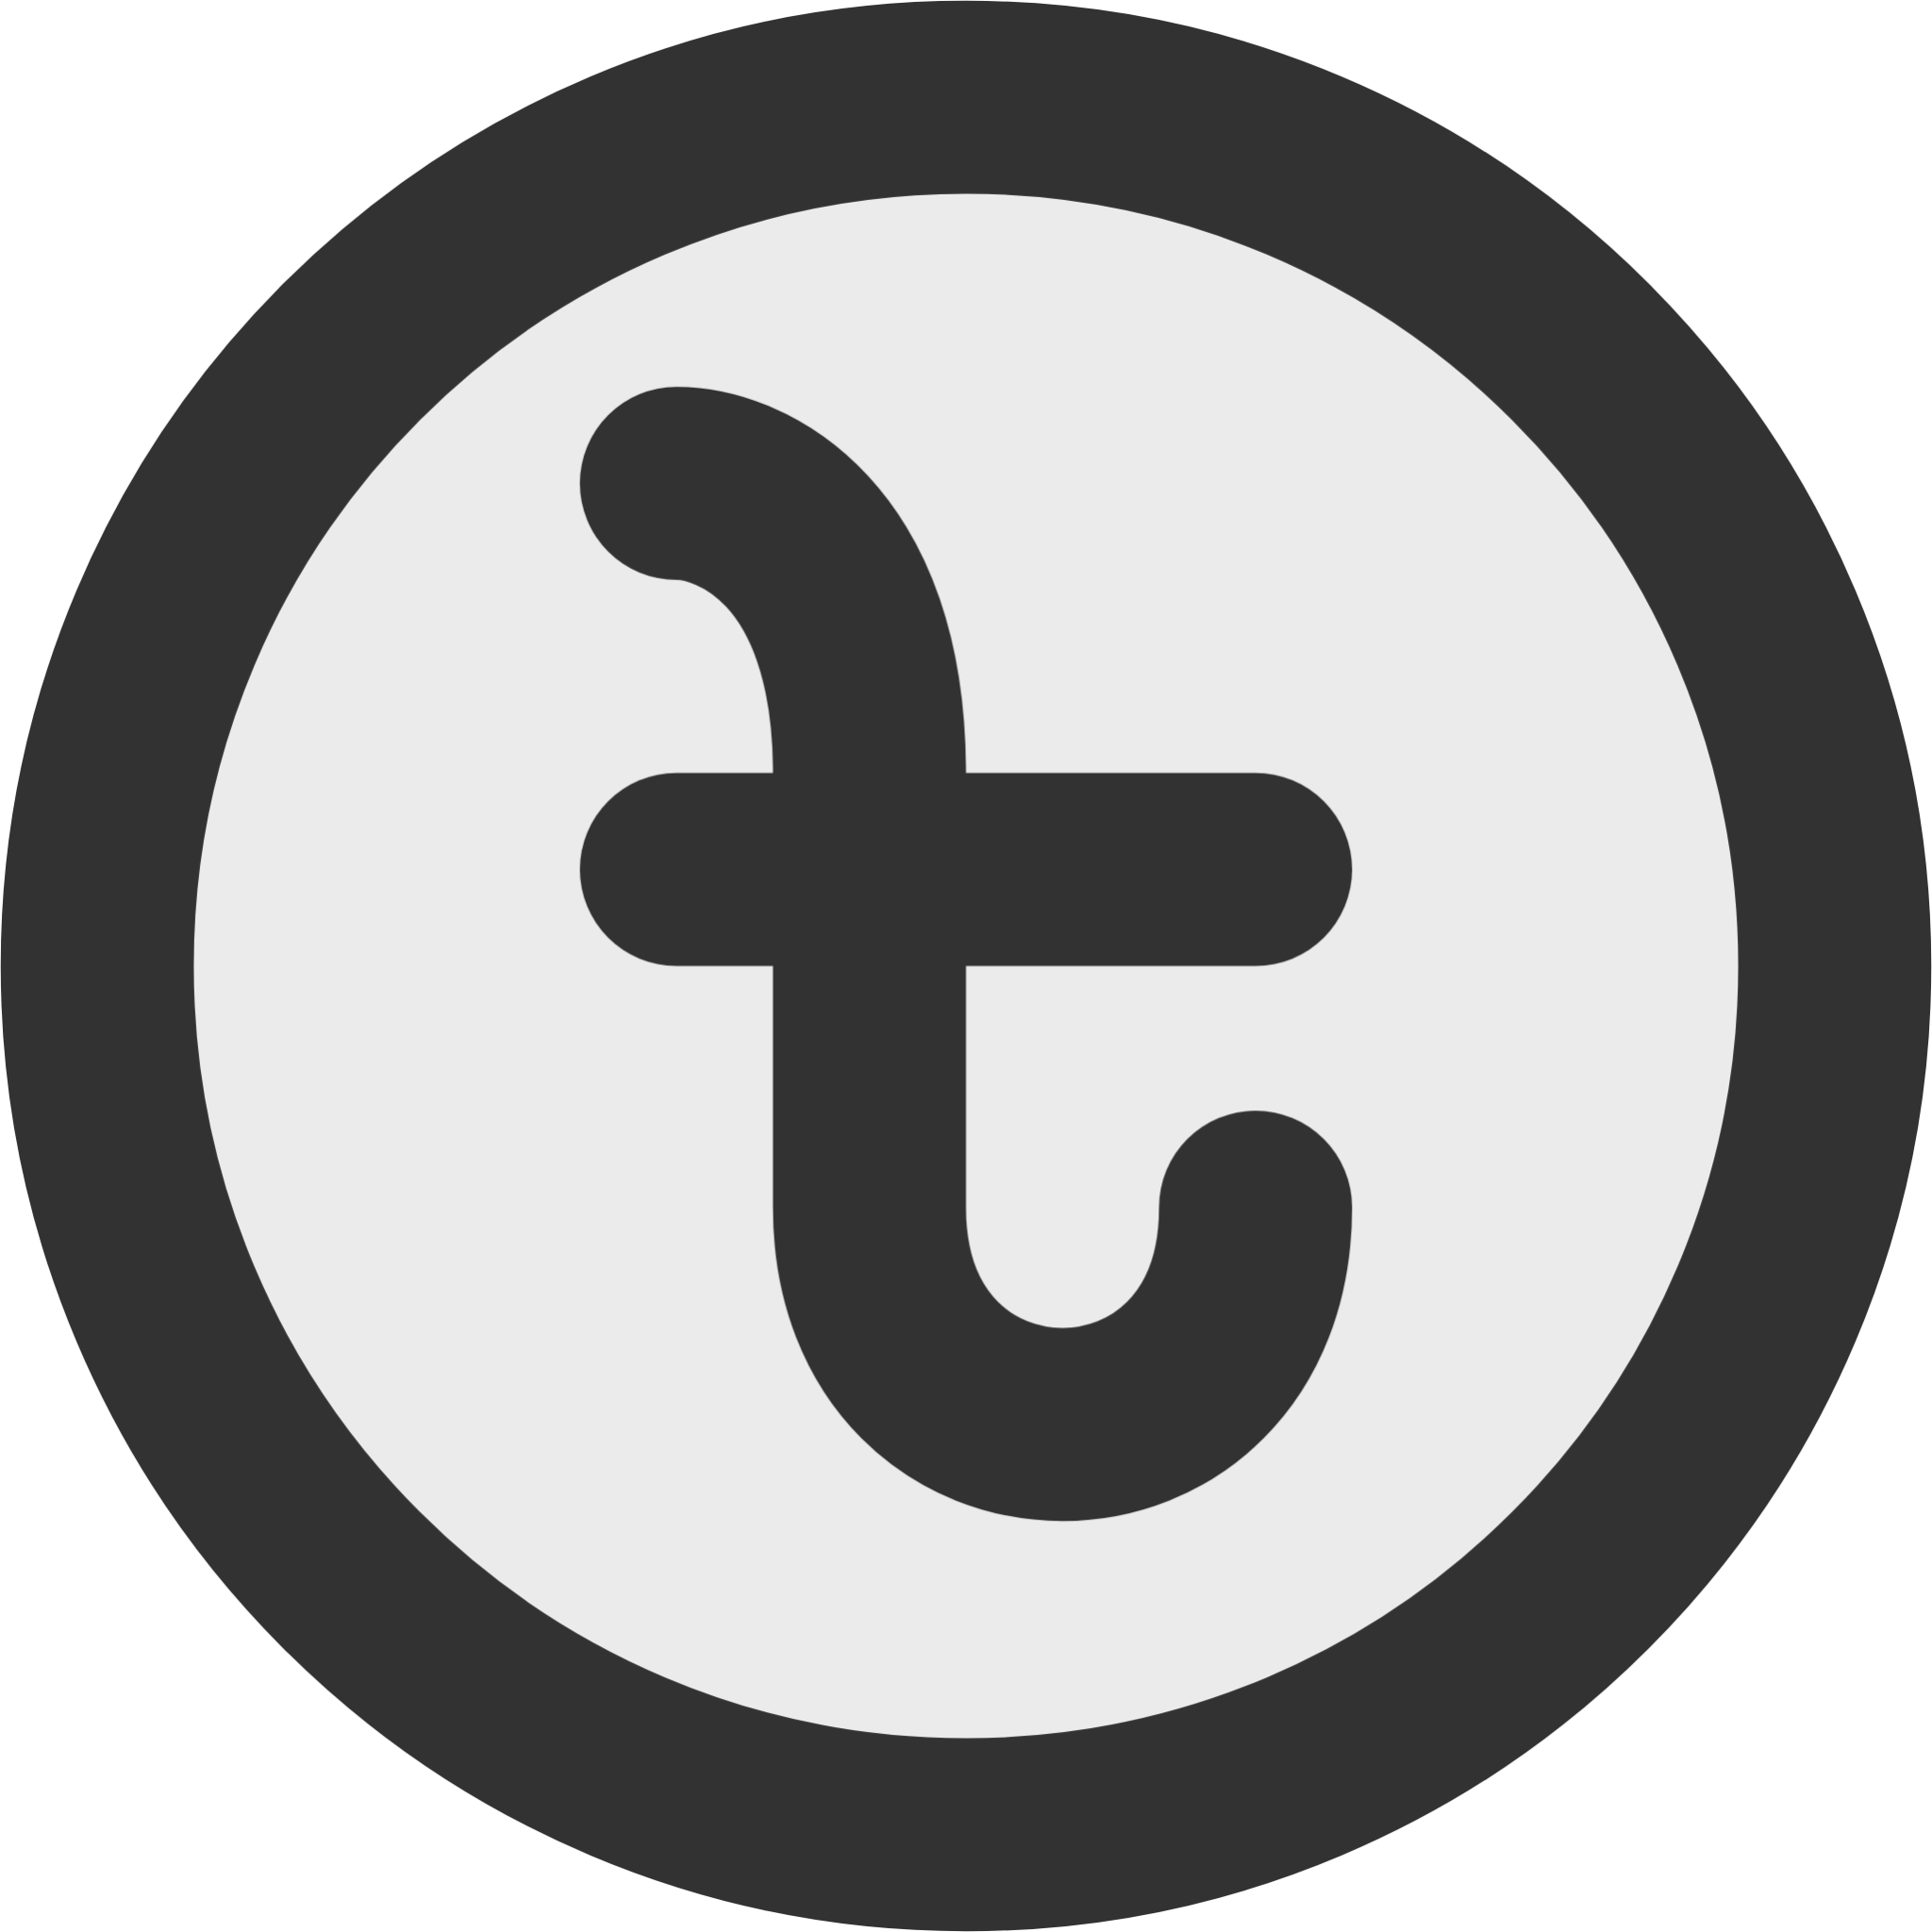 bangladeshi circle icon